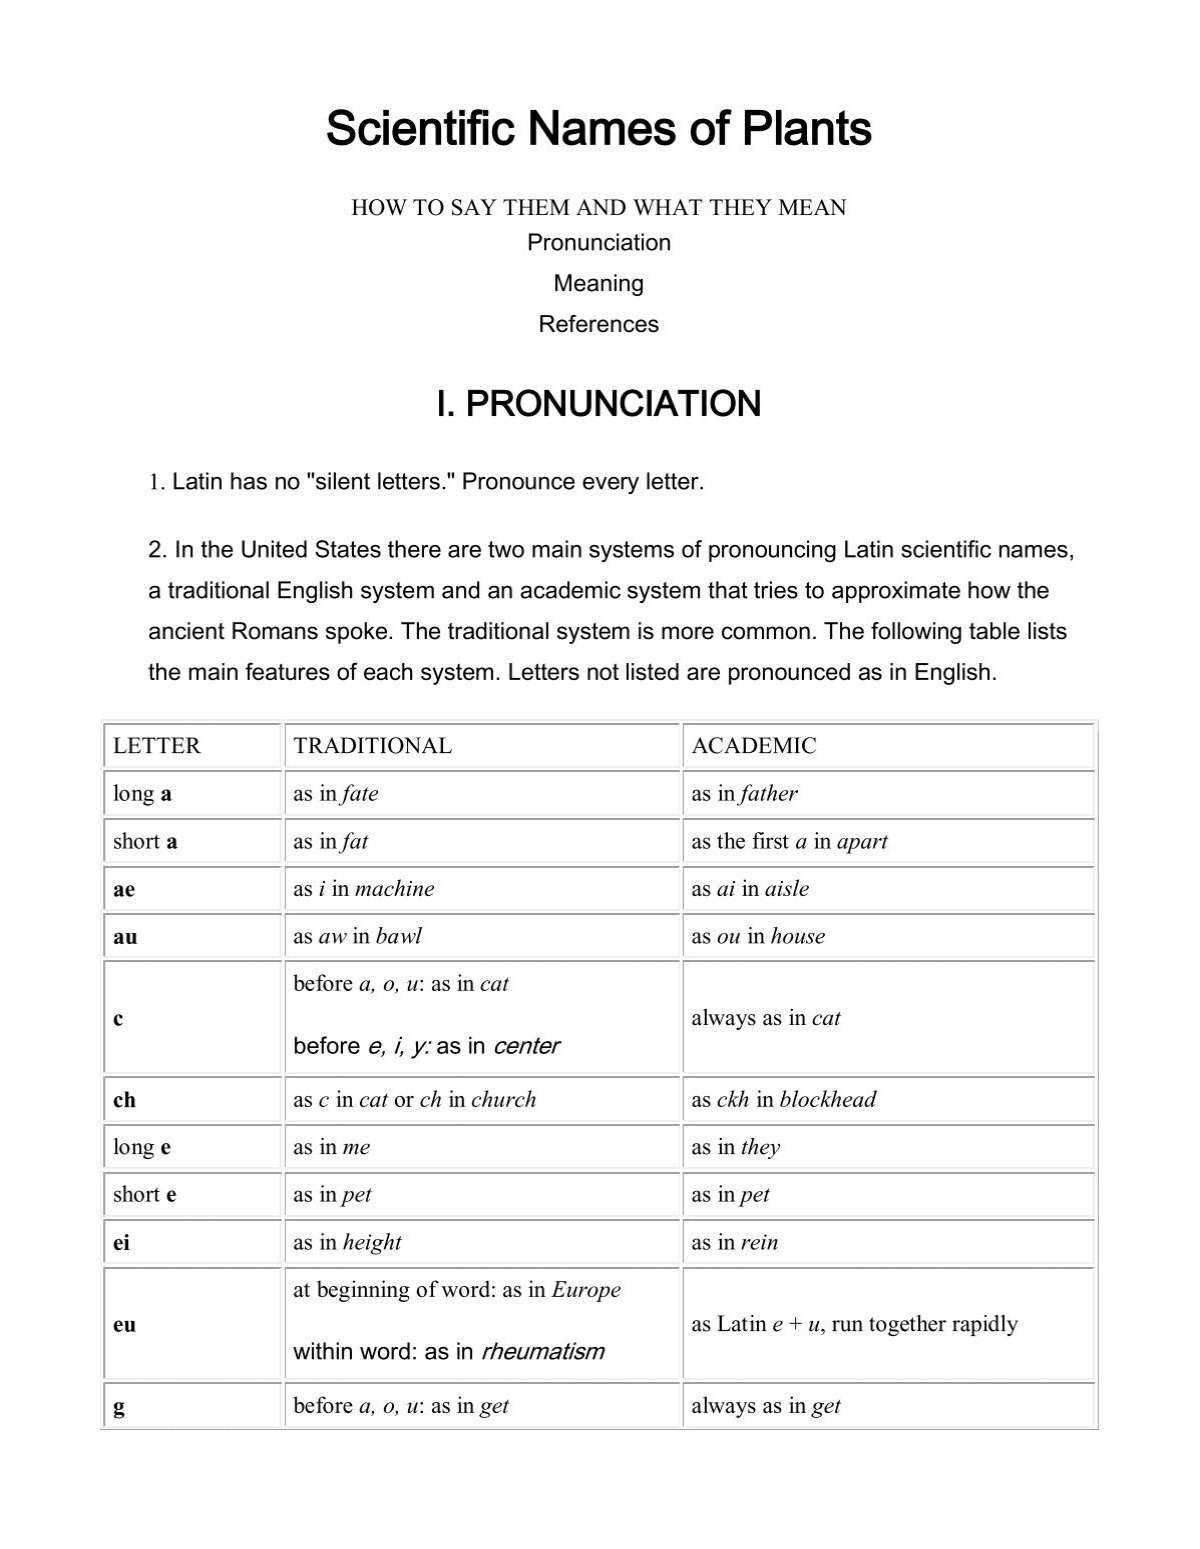 Scientific Names of Plants.pdf